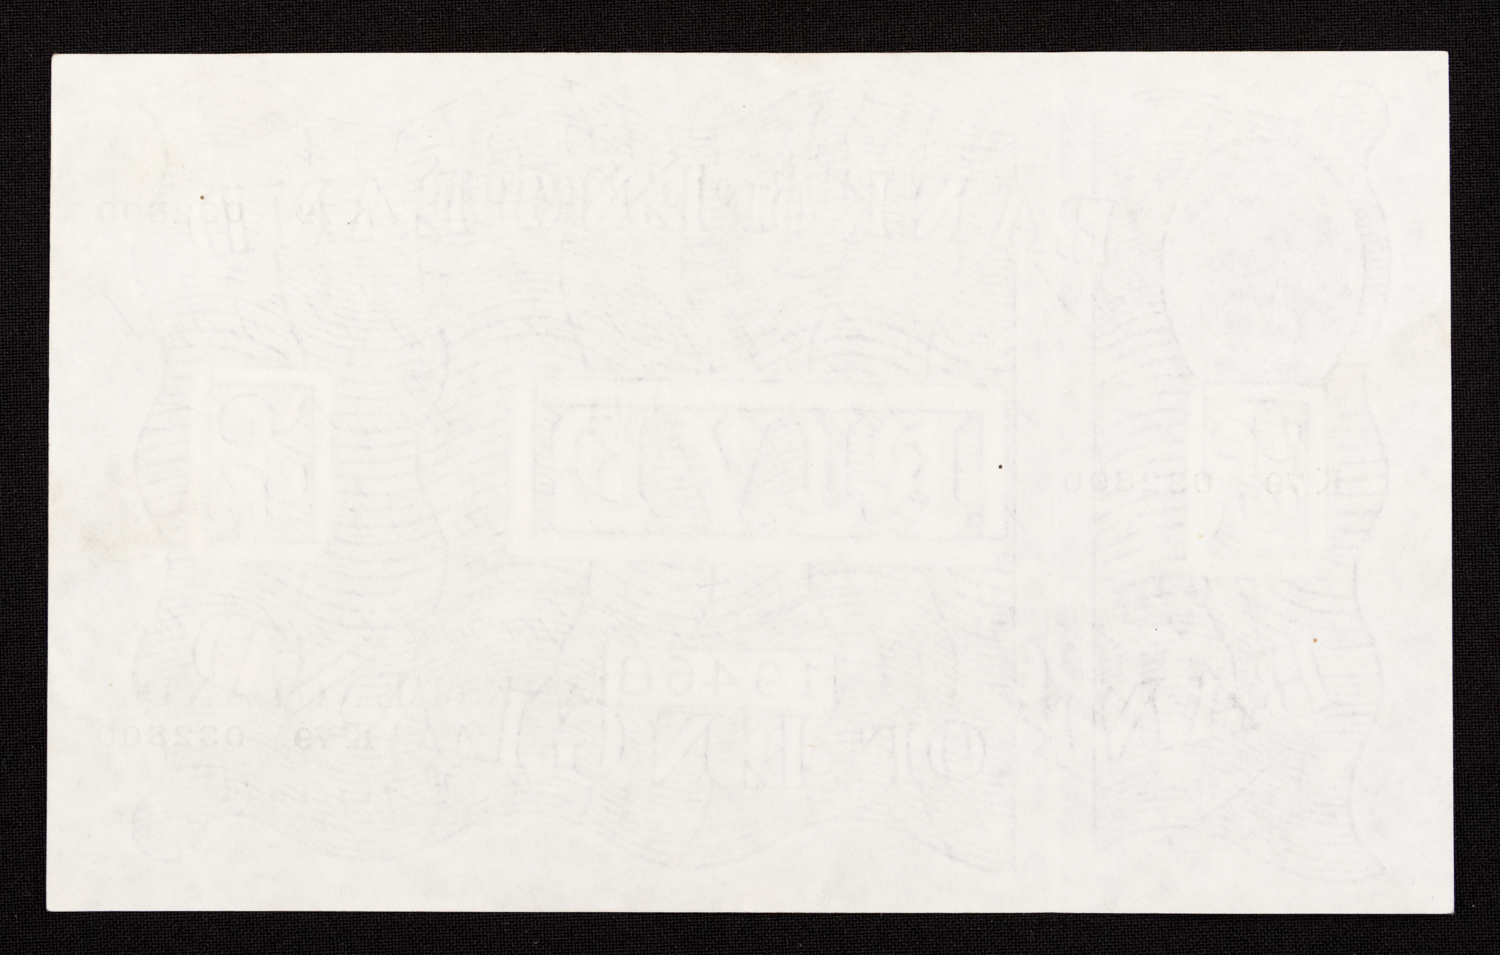 Banknote, Five Pounds Peppiatt dated 16th November 1945 series K79 932800,